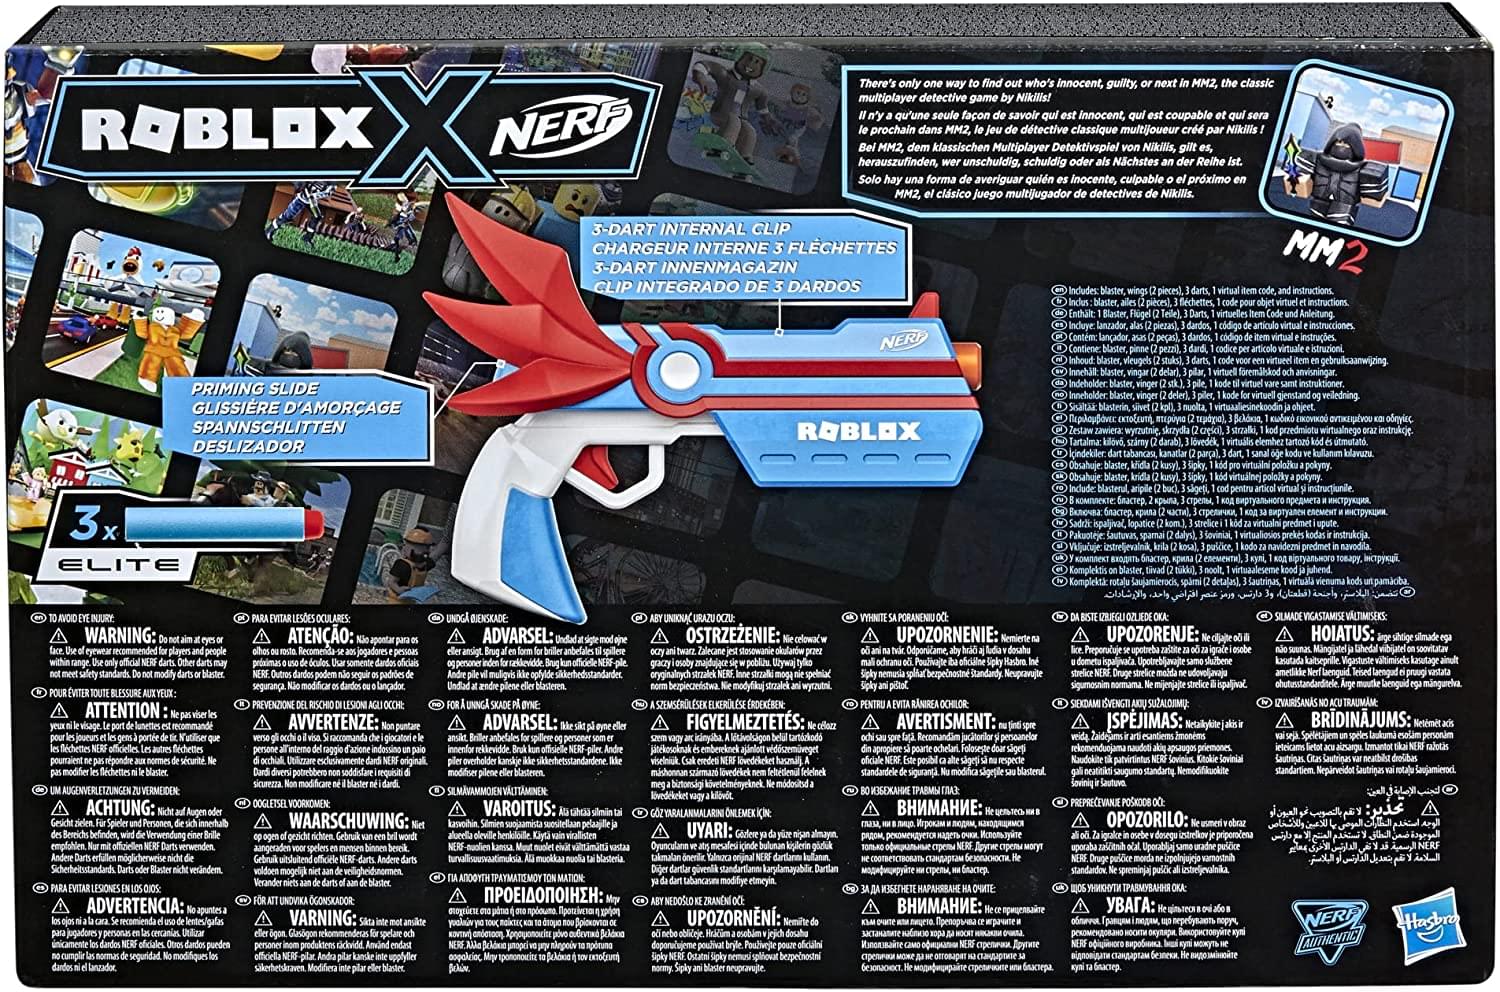 Nerf Roblox MM2 Dartbringer 3x Elite Hasbro Comes with Virtual